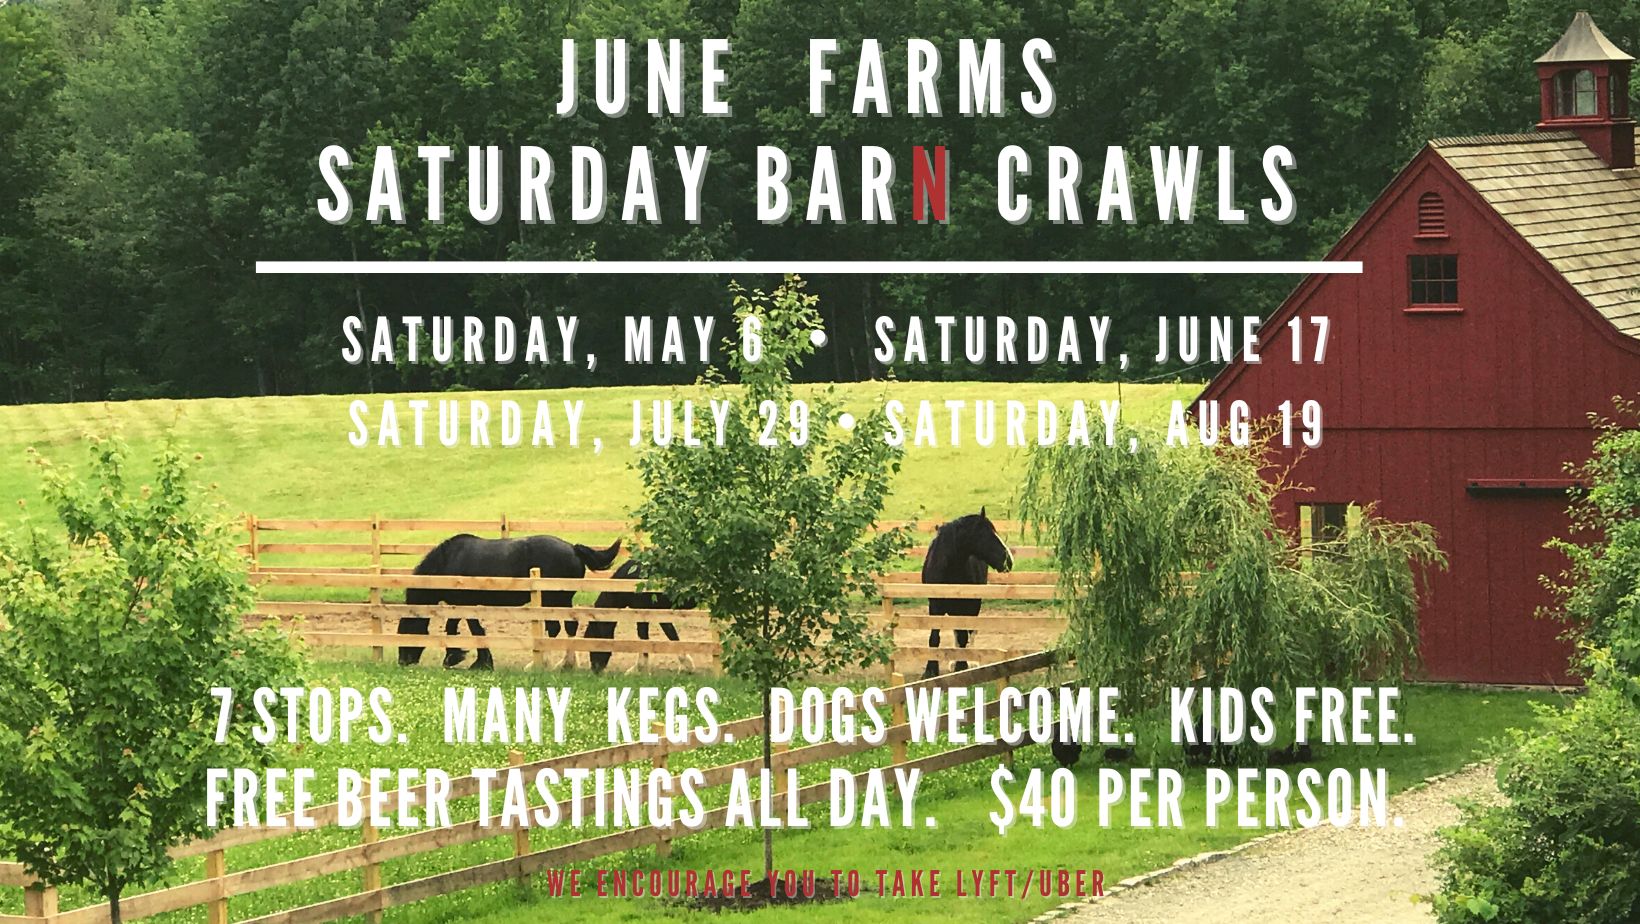 Saturday Barn Crawls June Farms